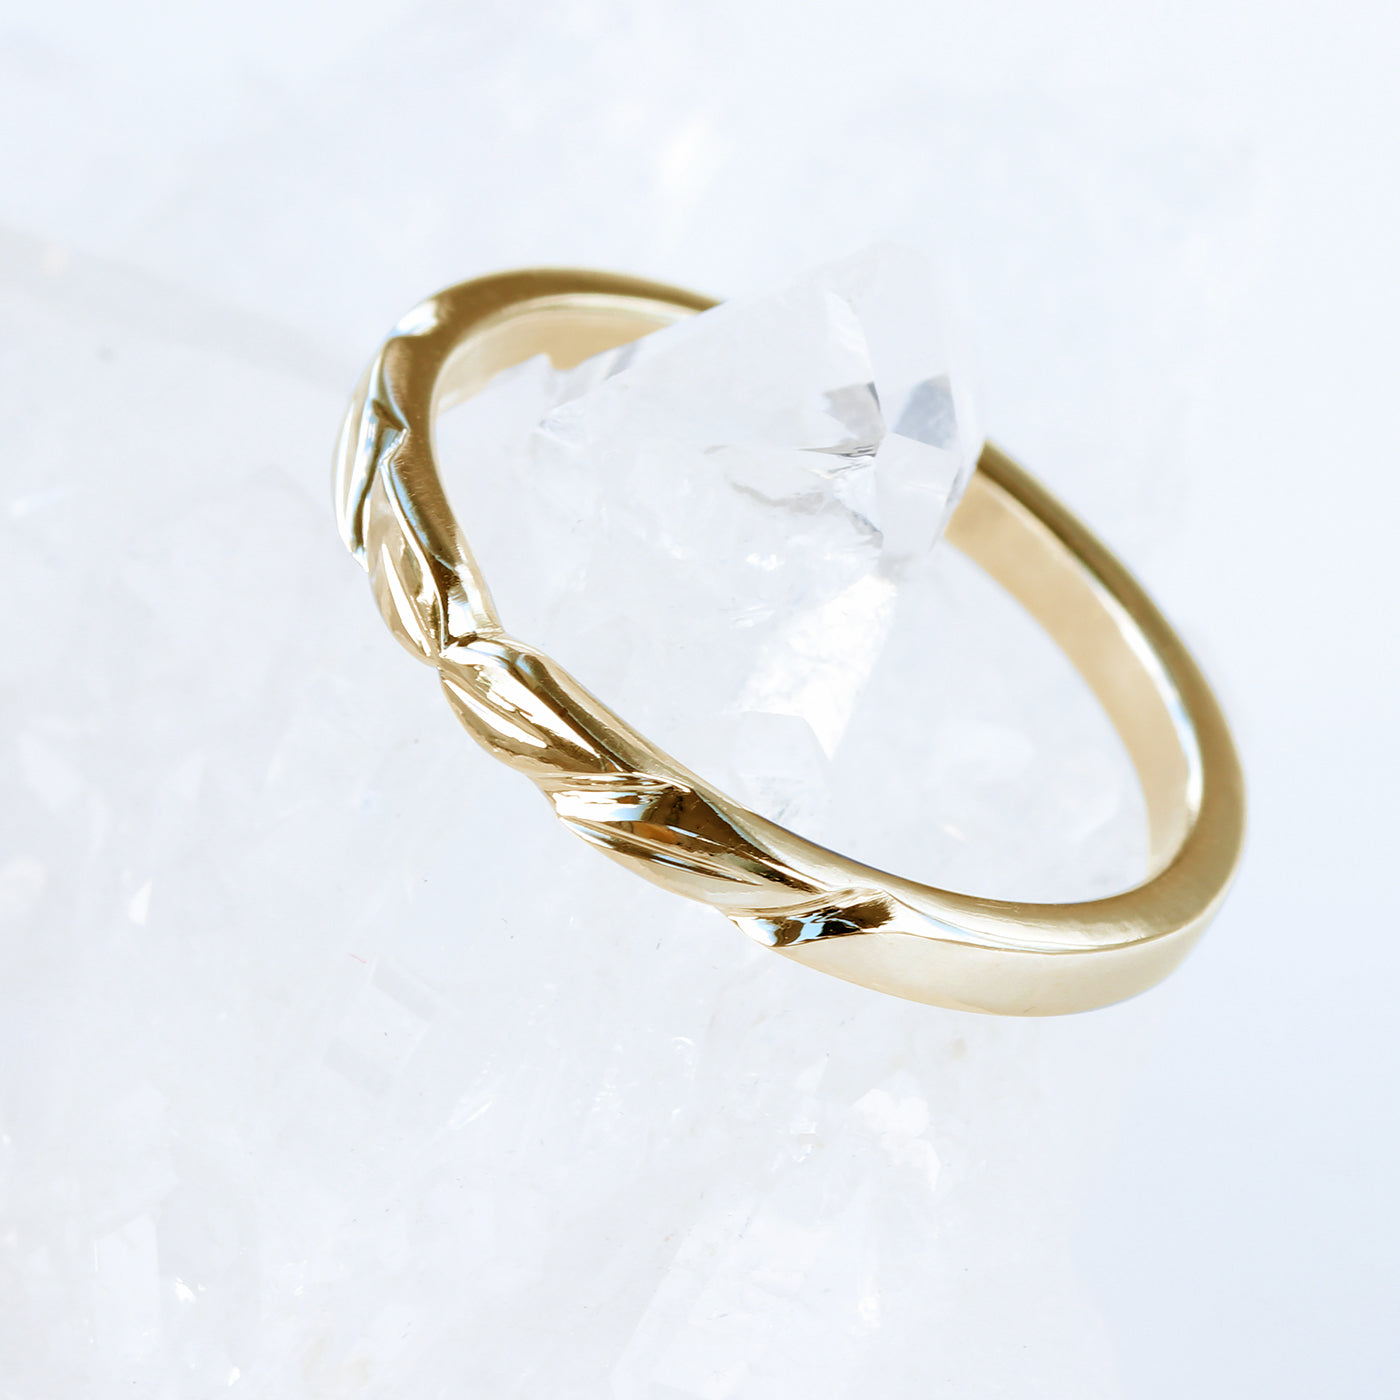 18ct Rose Gold Slim Leaf Wedding Ring